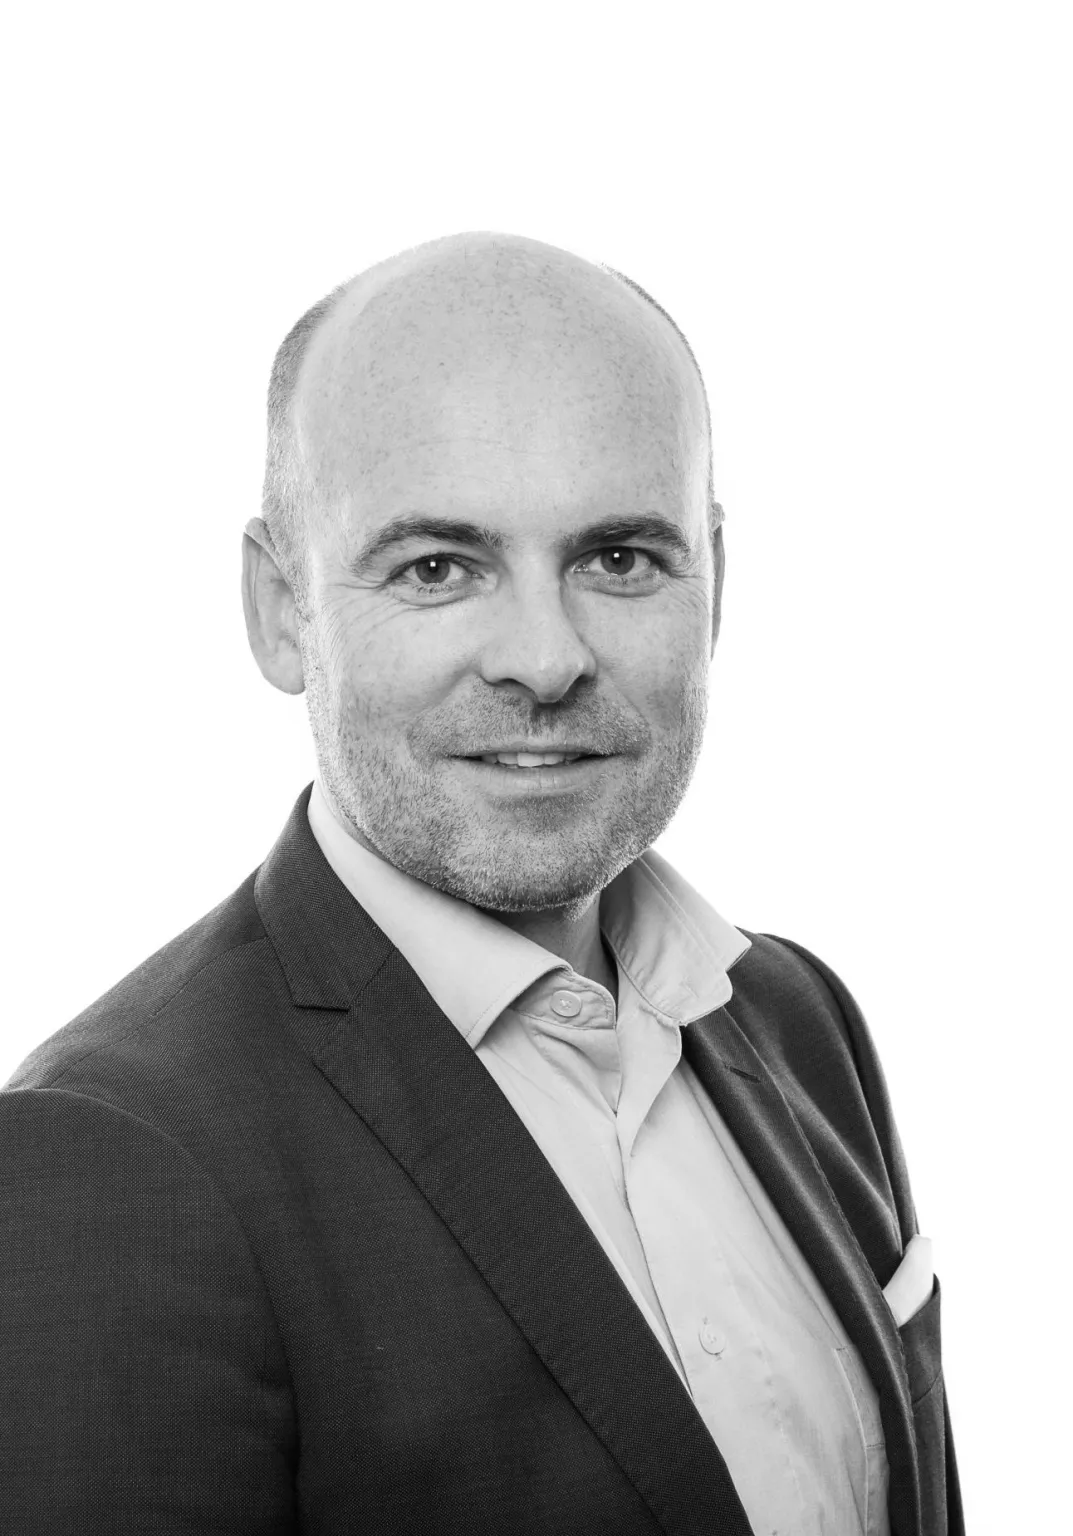 The CEO of Peak Group, Jan-Petter Slethaug.